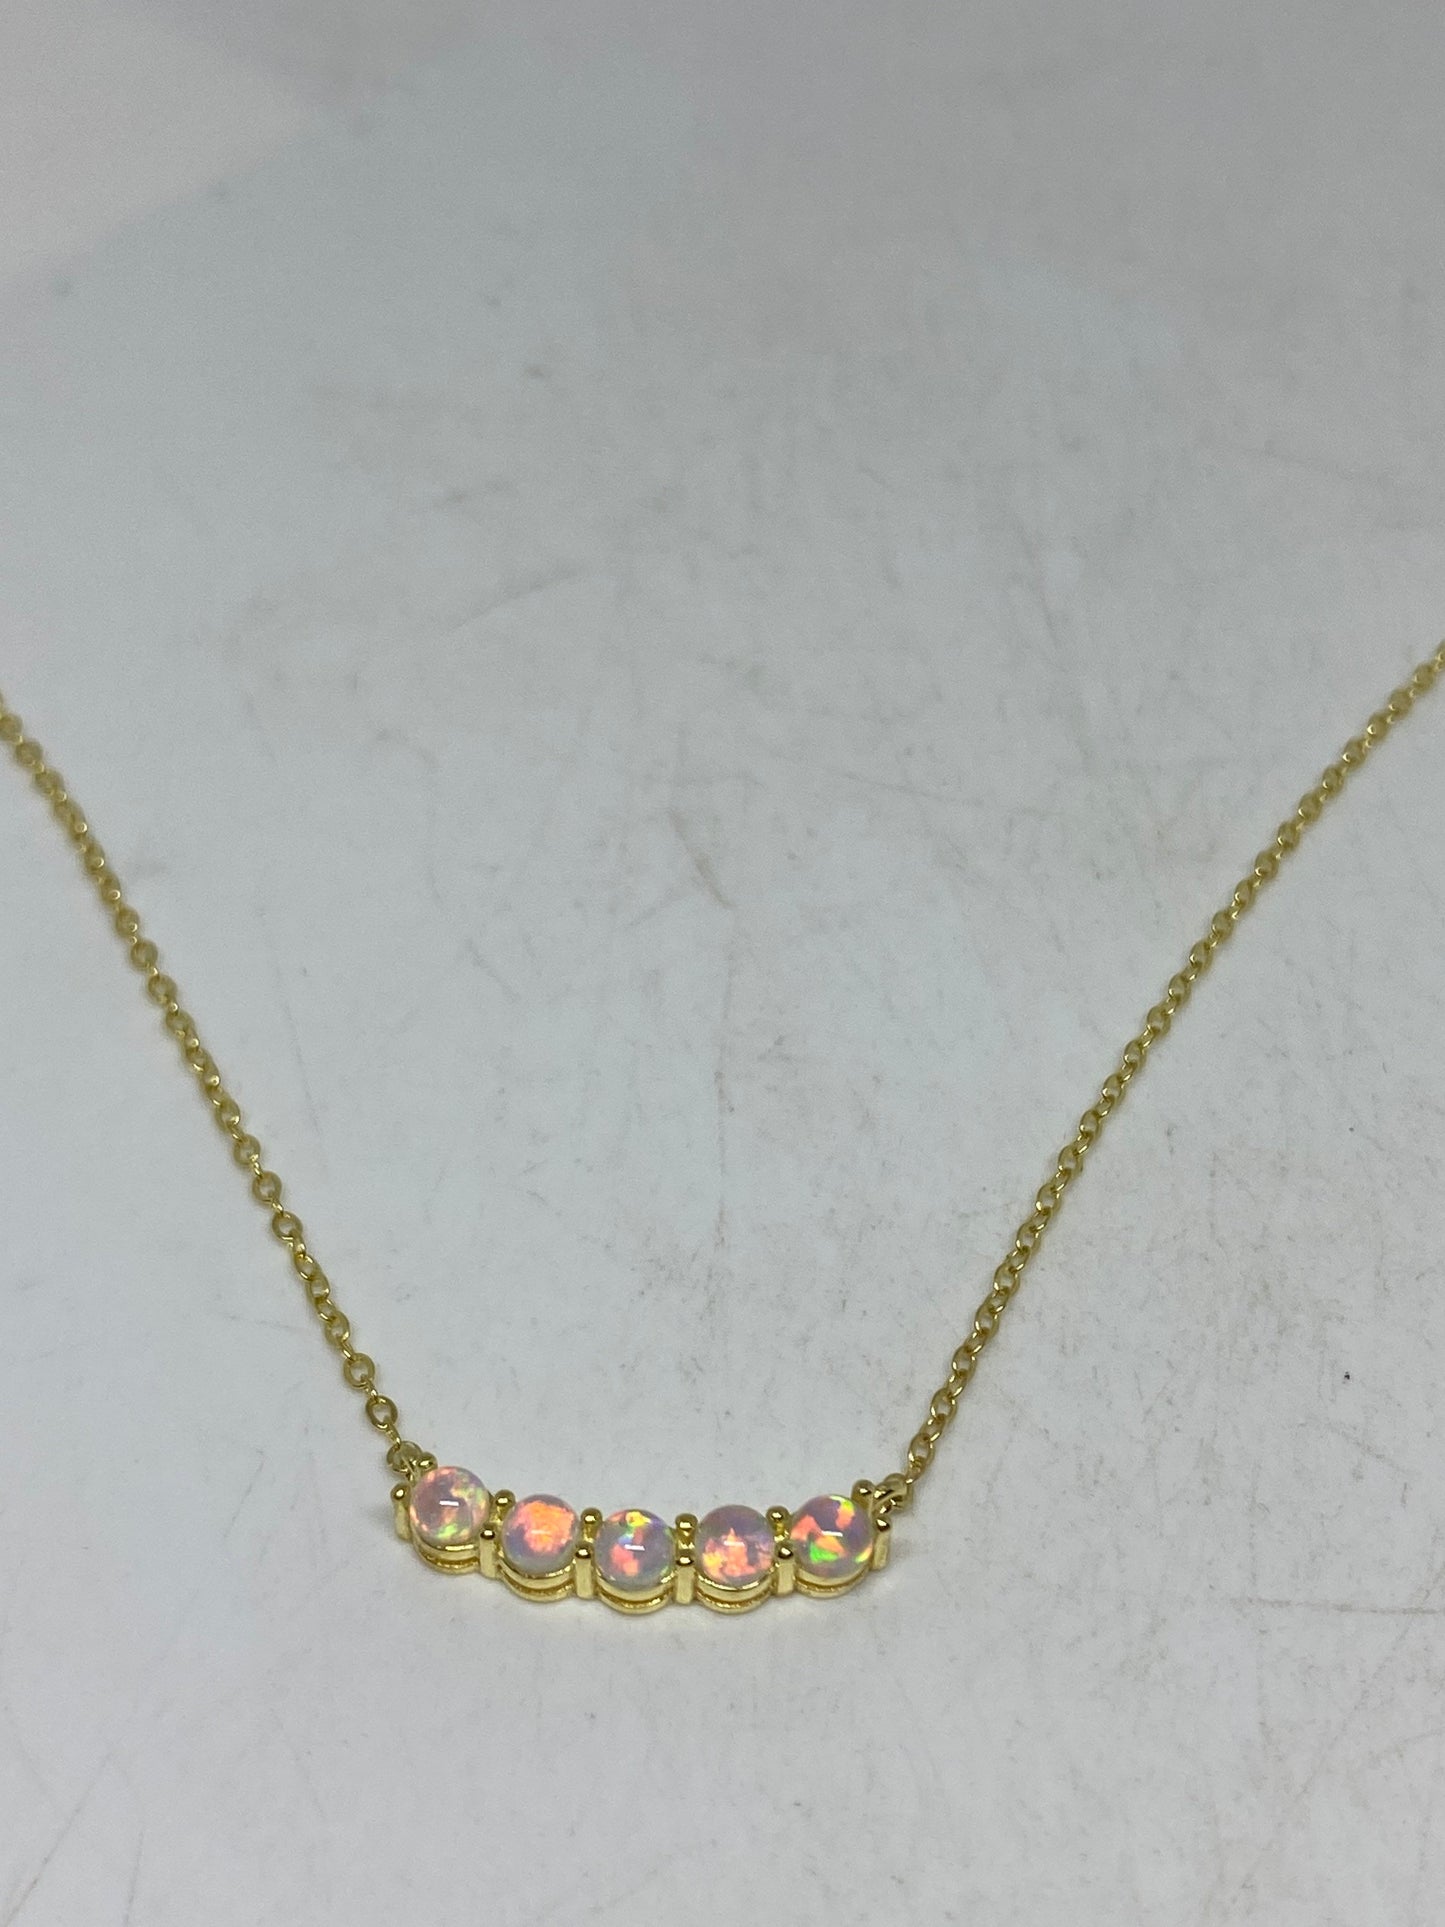 Vintage White Opal Choker Golden 925 Sterling Silver Pendant Necklace